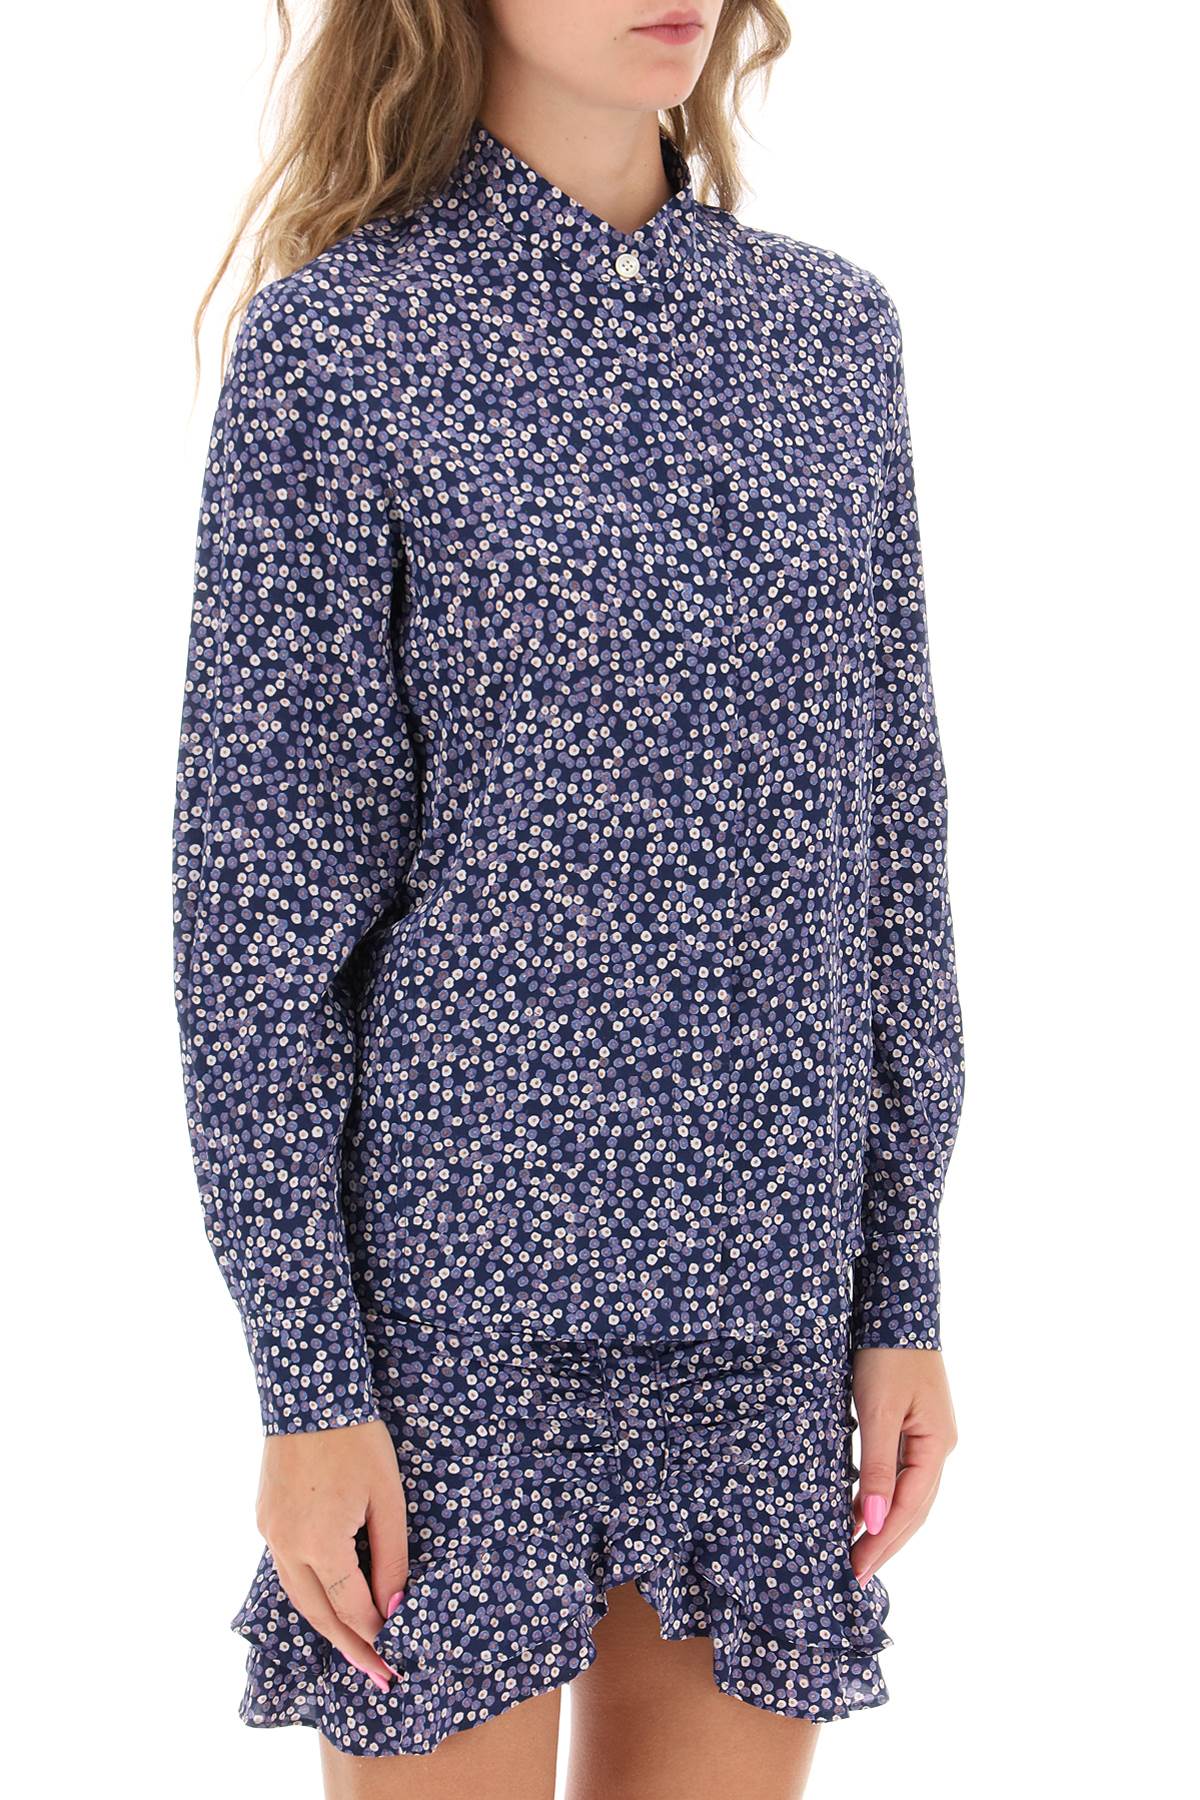 Isabel marant ilda silk shirt with floral print-1